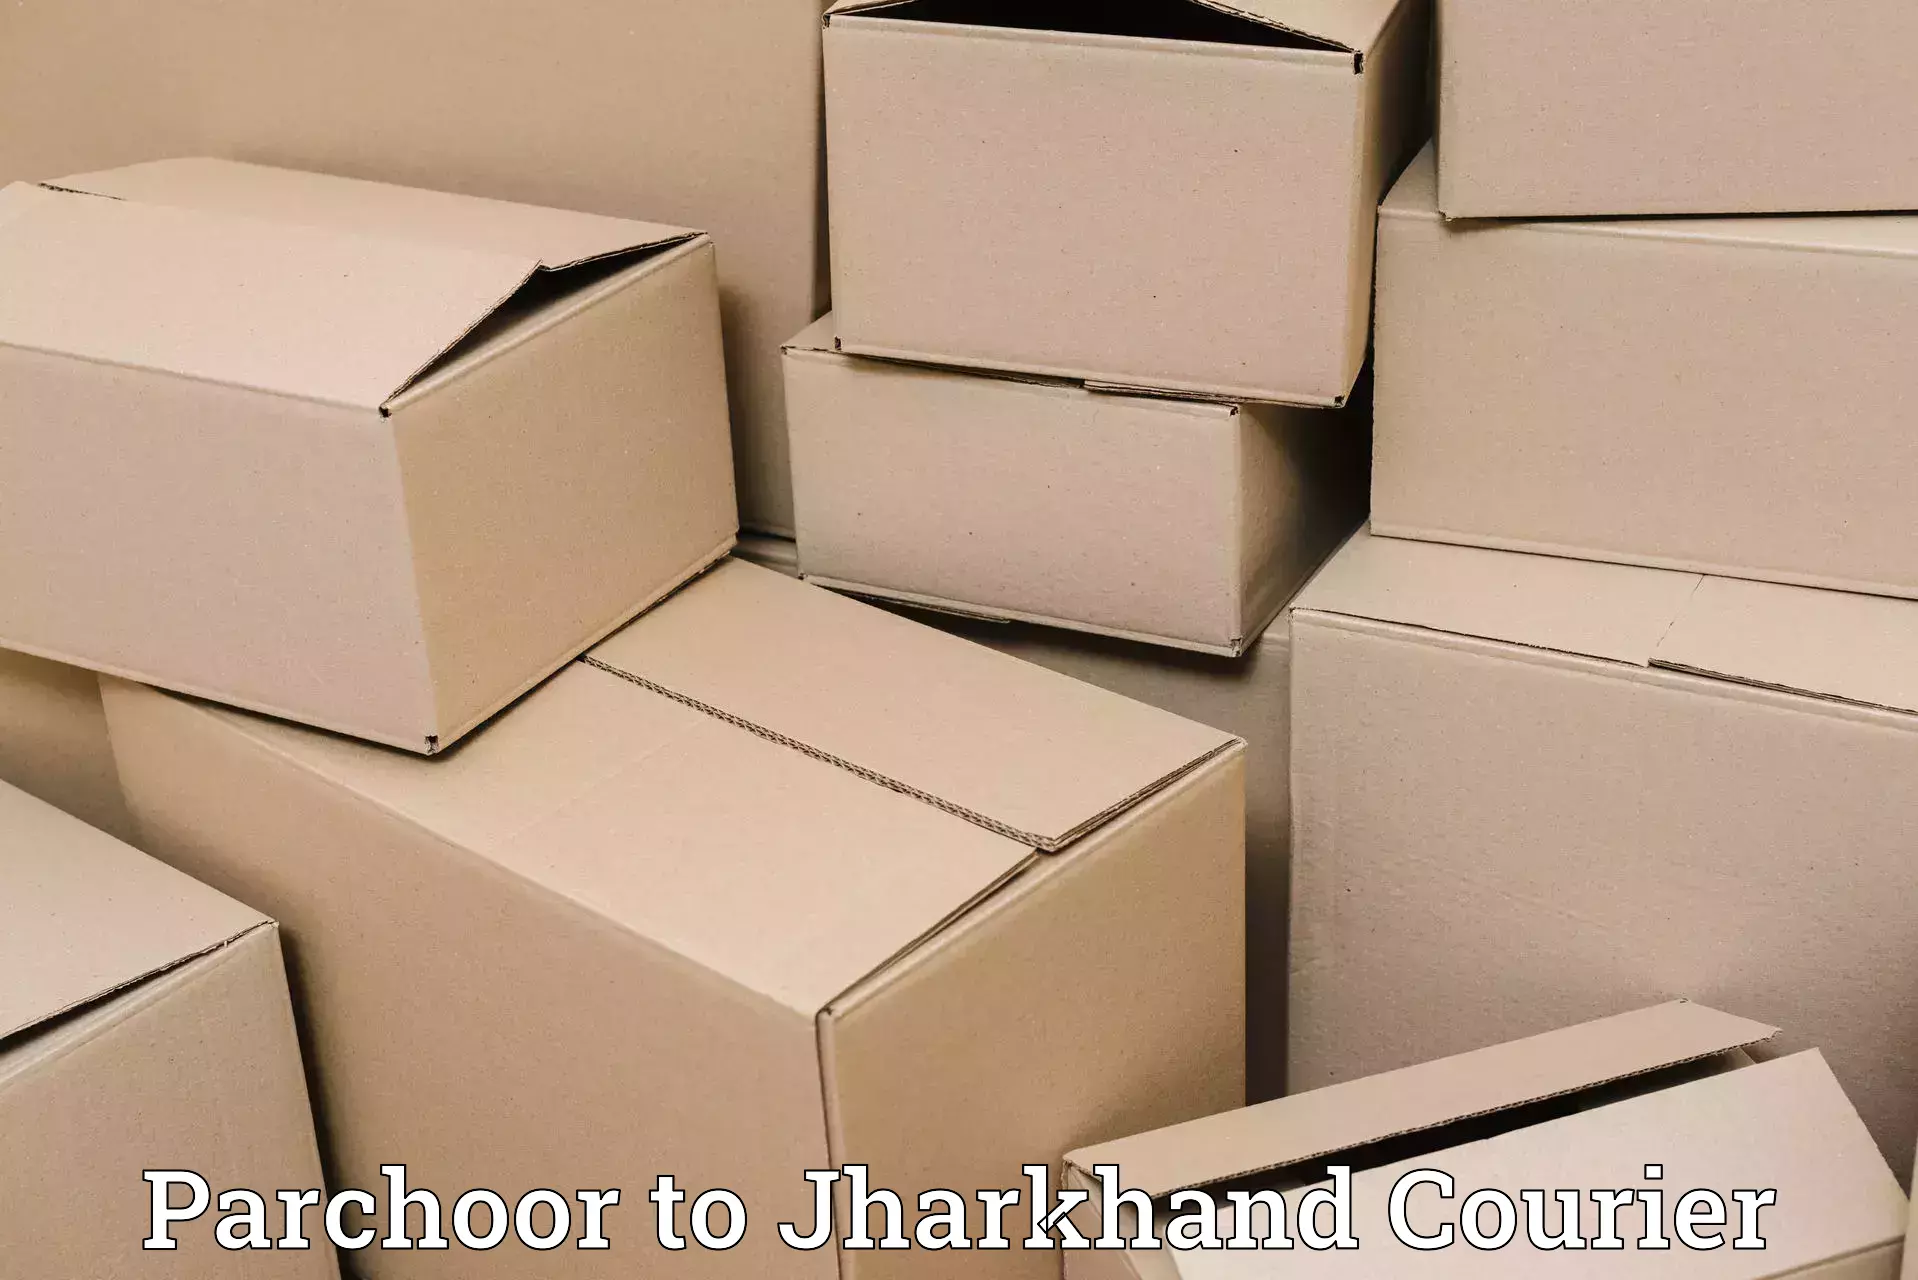 Express logistics providers Parchoor to Jharkhand